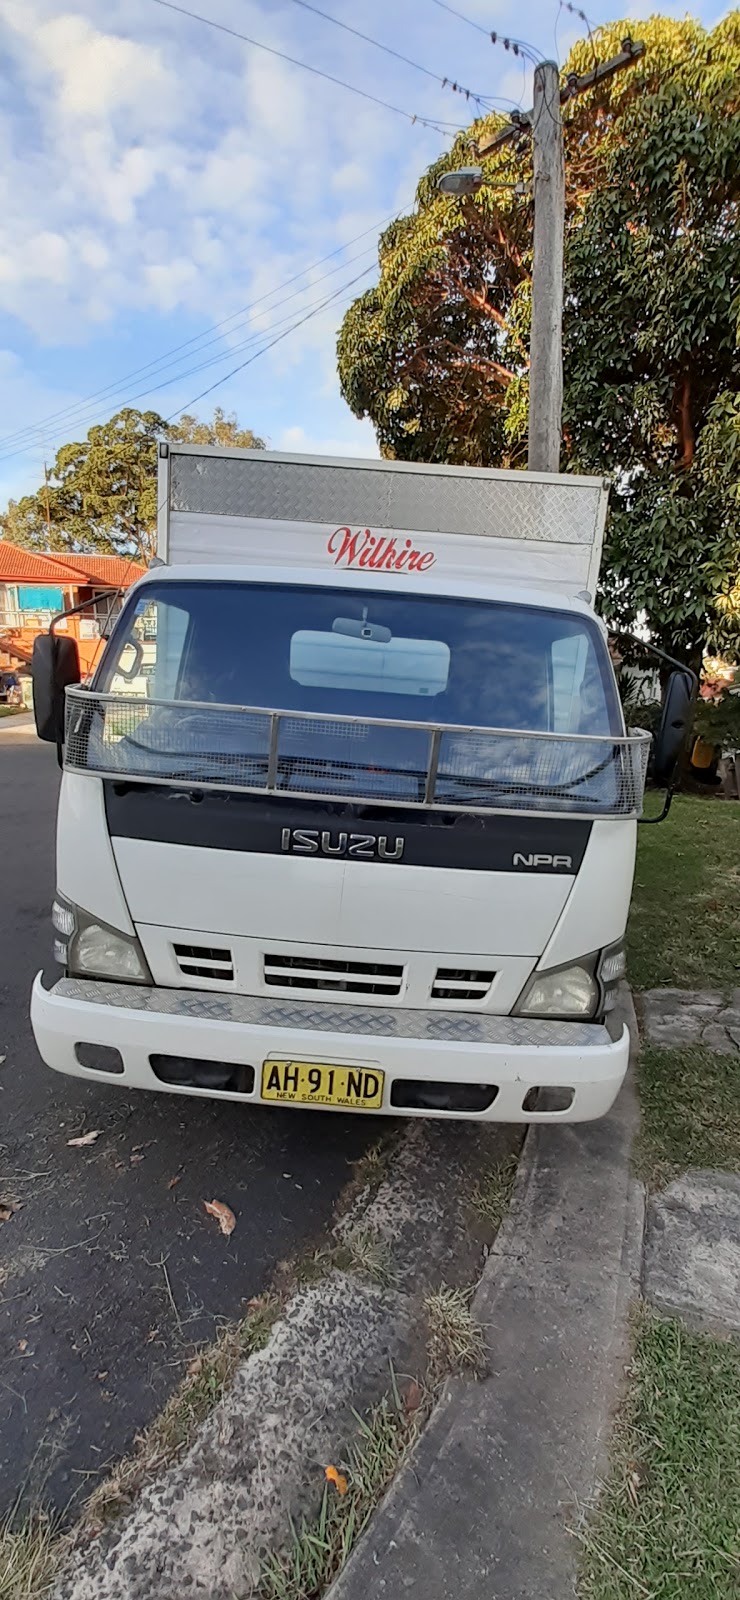 Wilhire Truck & Auto Rental Pty Ltd | 8b Flinders St, North Wollongong NSW 2500, Australia | Phone: (02) 4228 8500